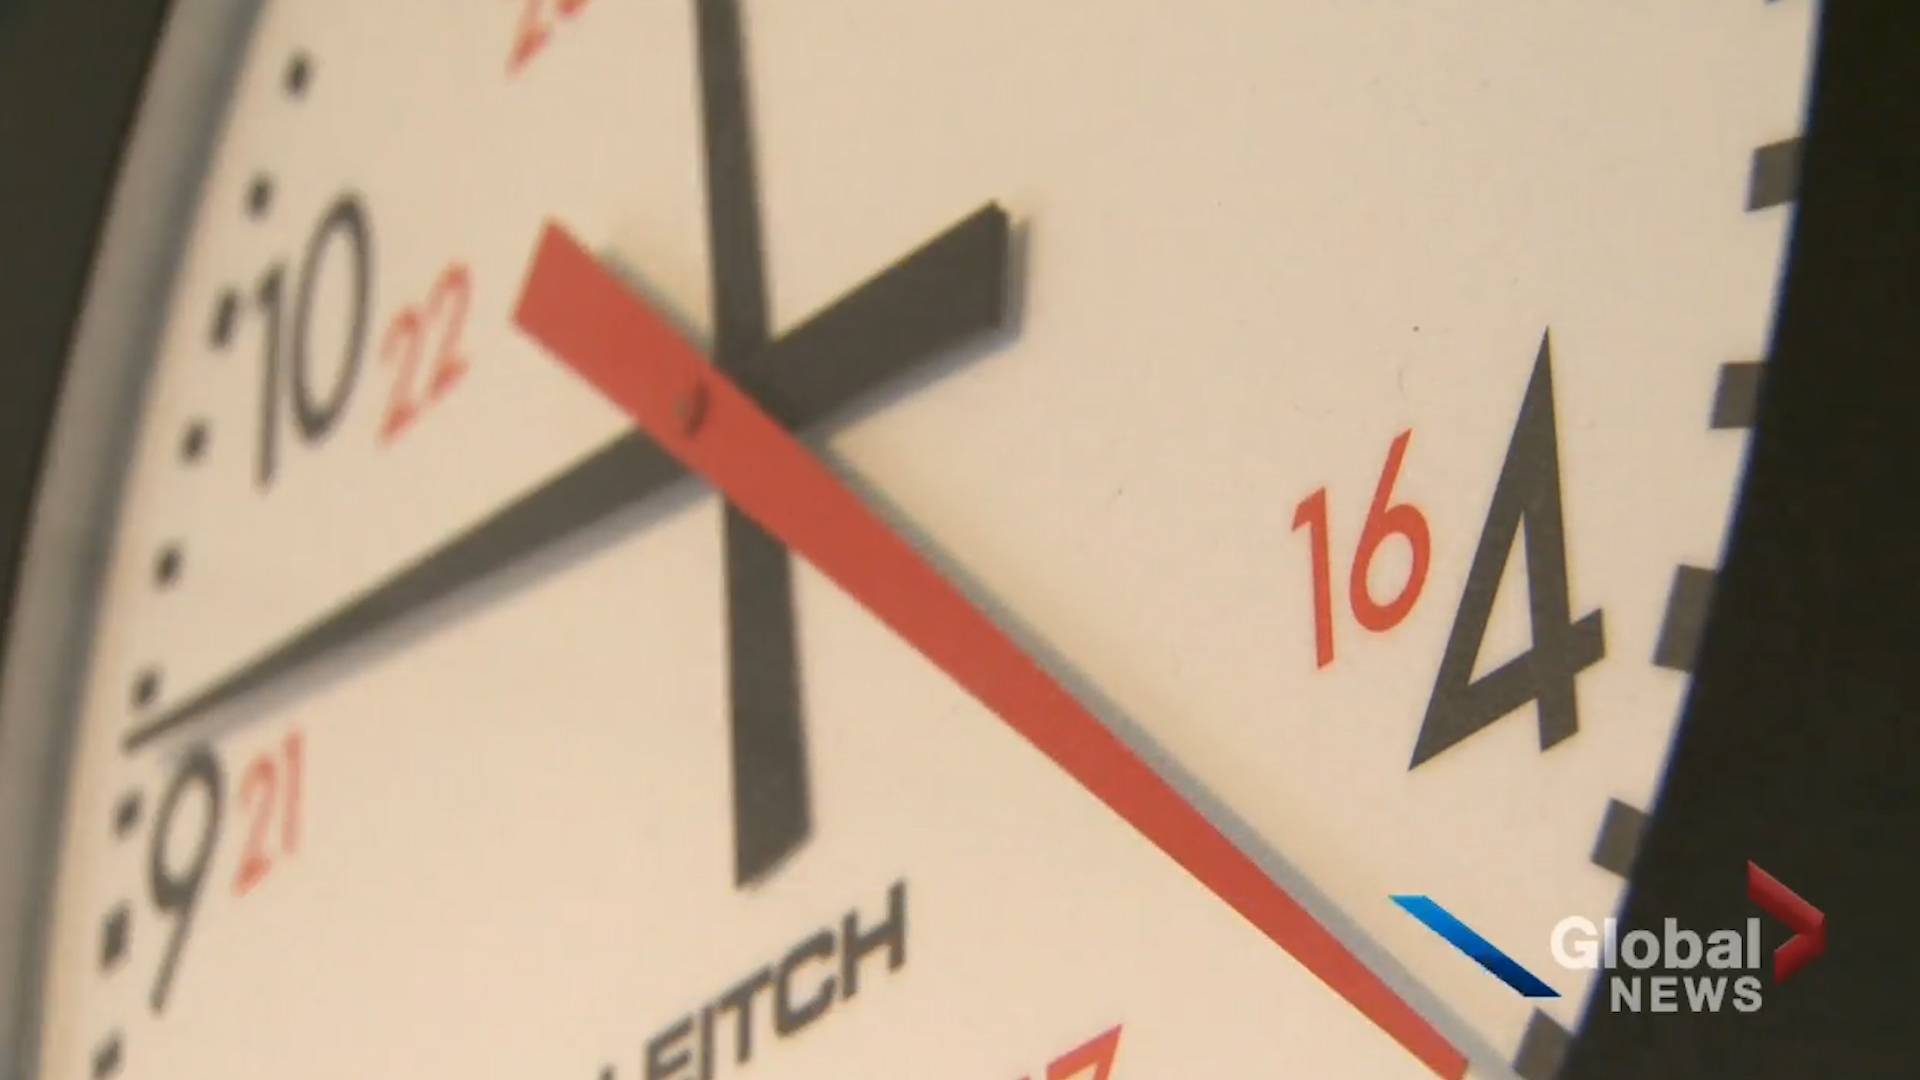 Toronto researchers push to eliminate Daylight Saving Time, switch